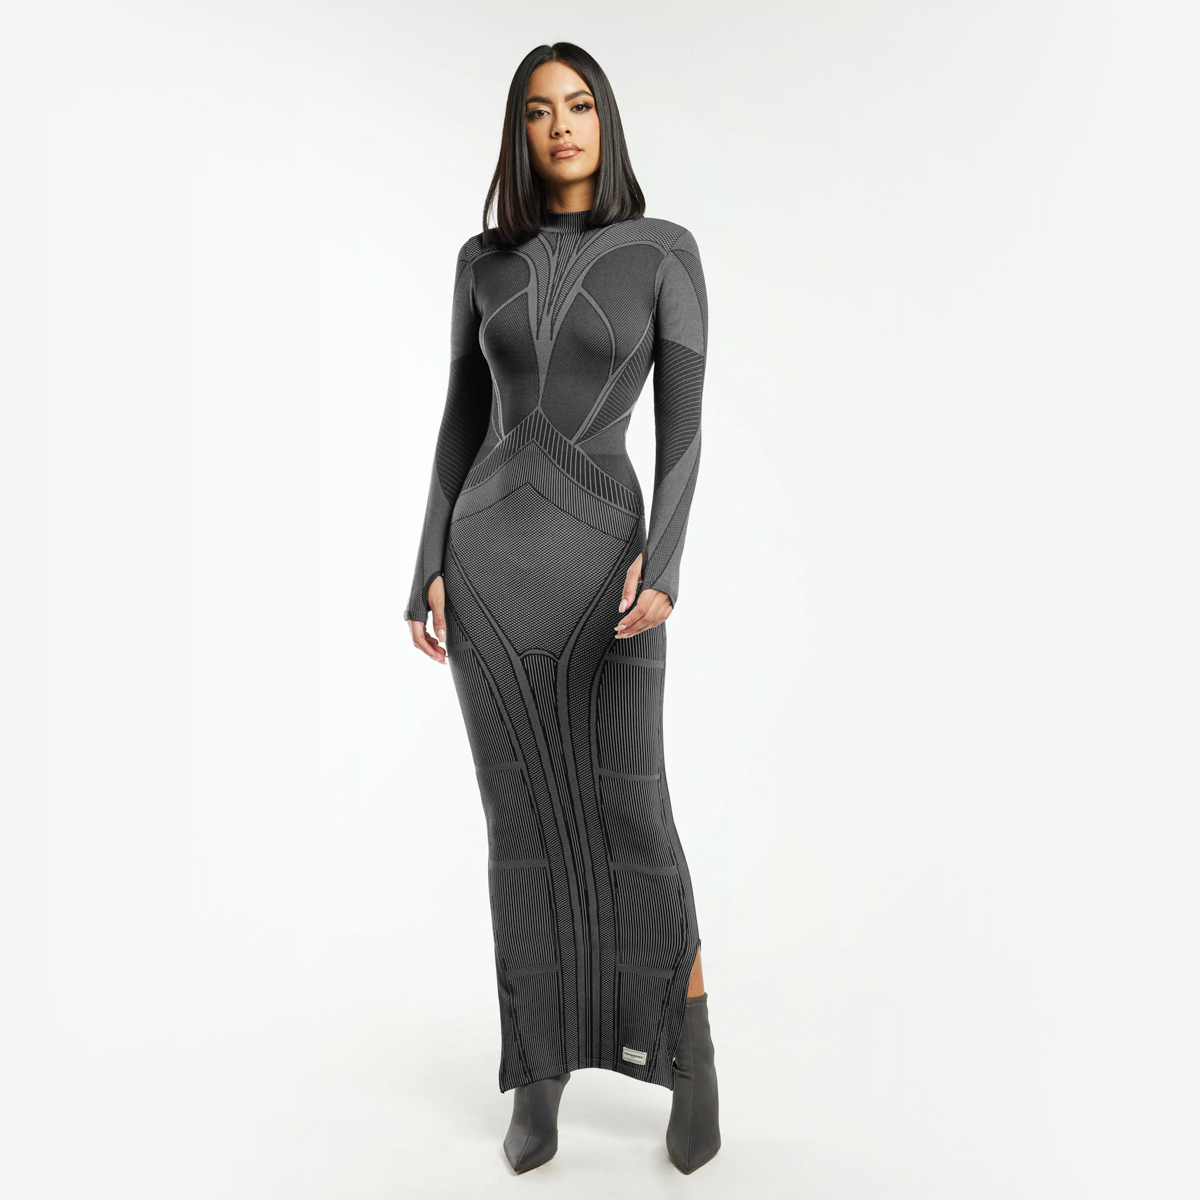 Buy Contrast High-Neck Long-Sleeve SMLS100 Dress - Pitch Black